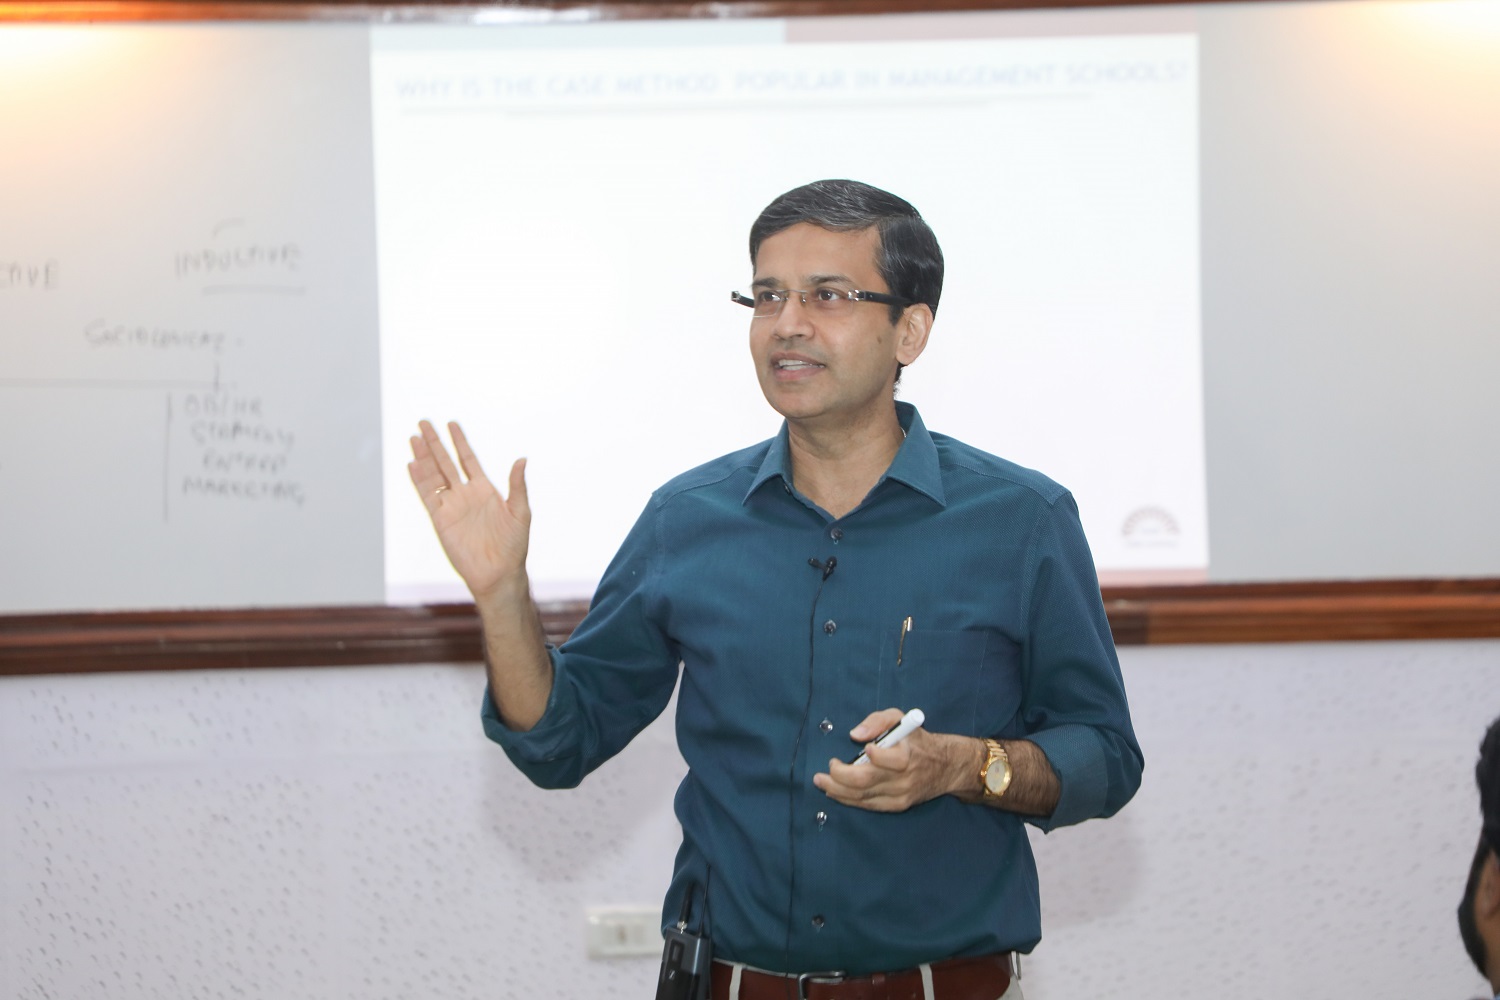 Prof. Sourav Mukherji conducting a session on ‘Case Teaching’. 